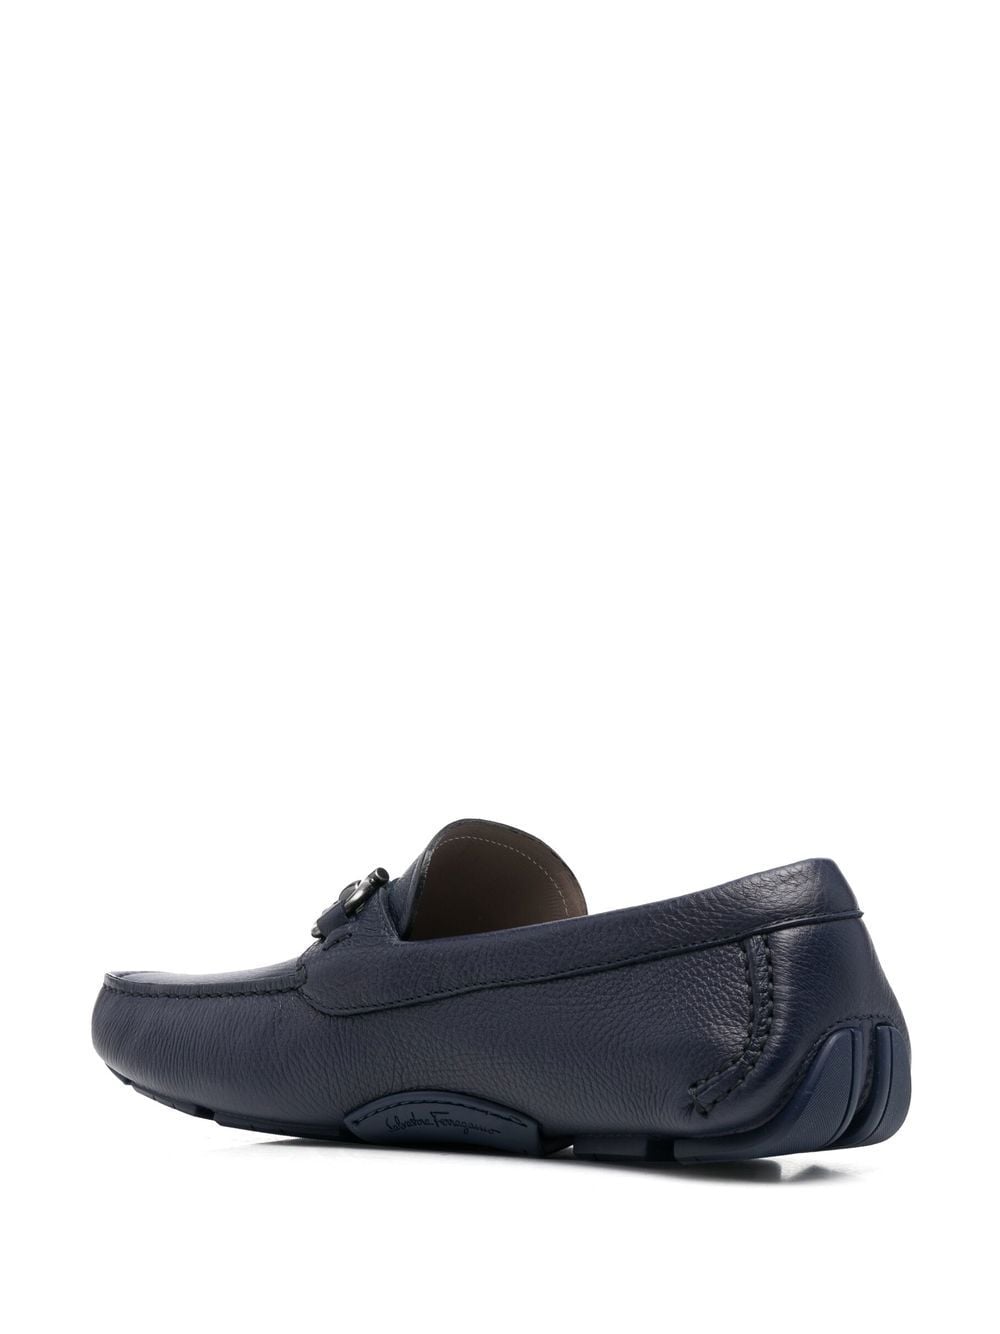 Ferragamo Flat shoes Blue-Ferragamo-6.5-Urbanheer